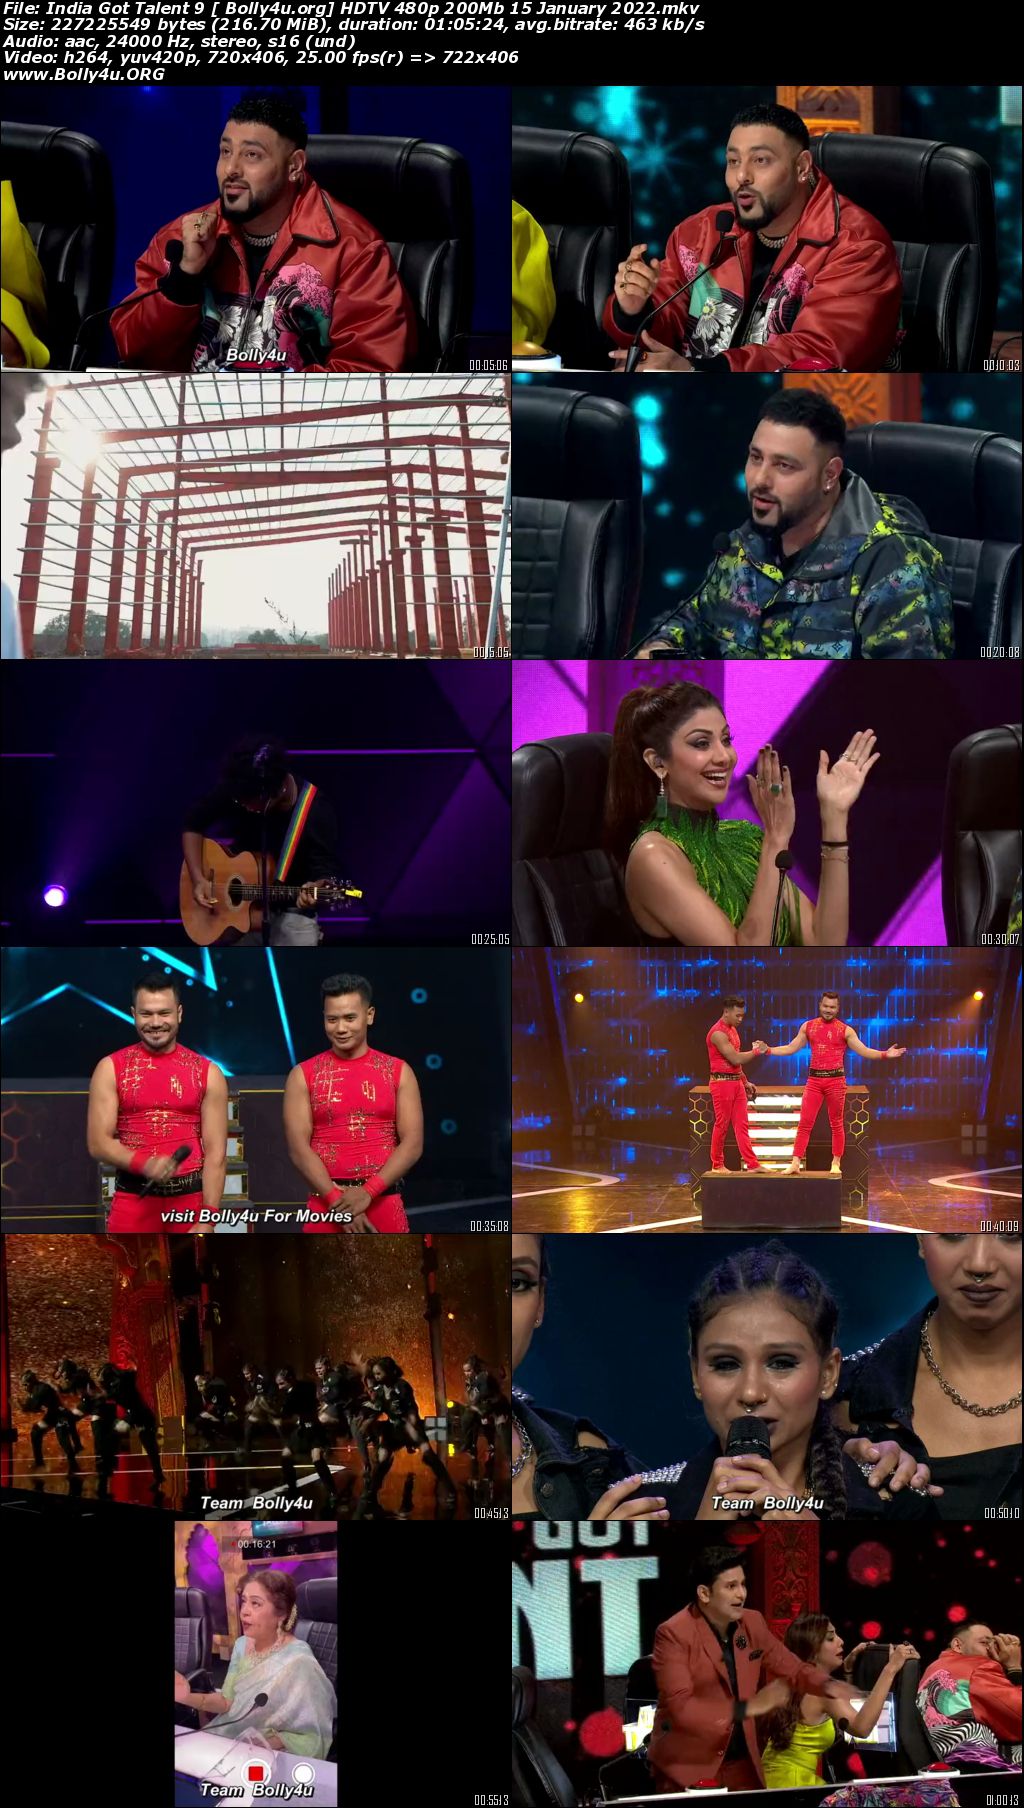 India Got Talent 9 HDTV 480p 200Mb 15 January 2022 Download